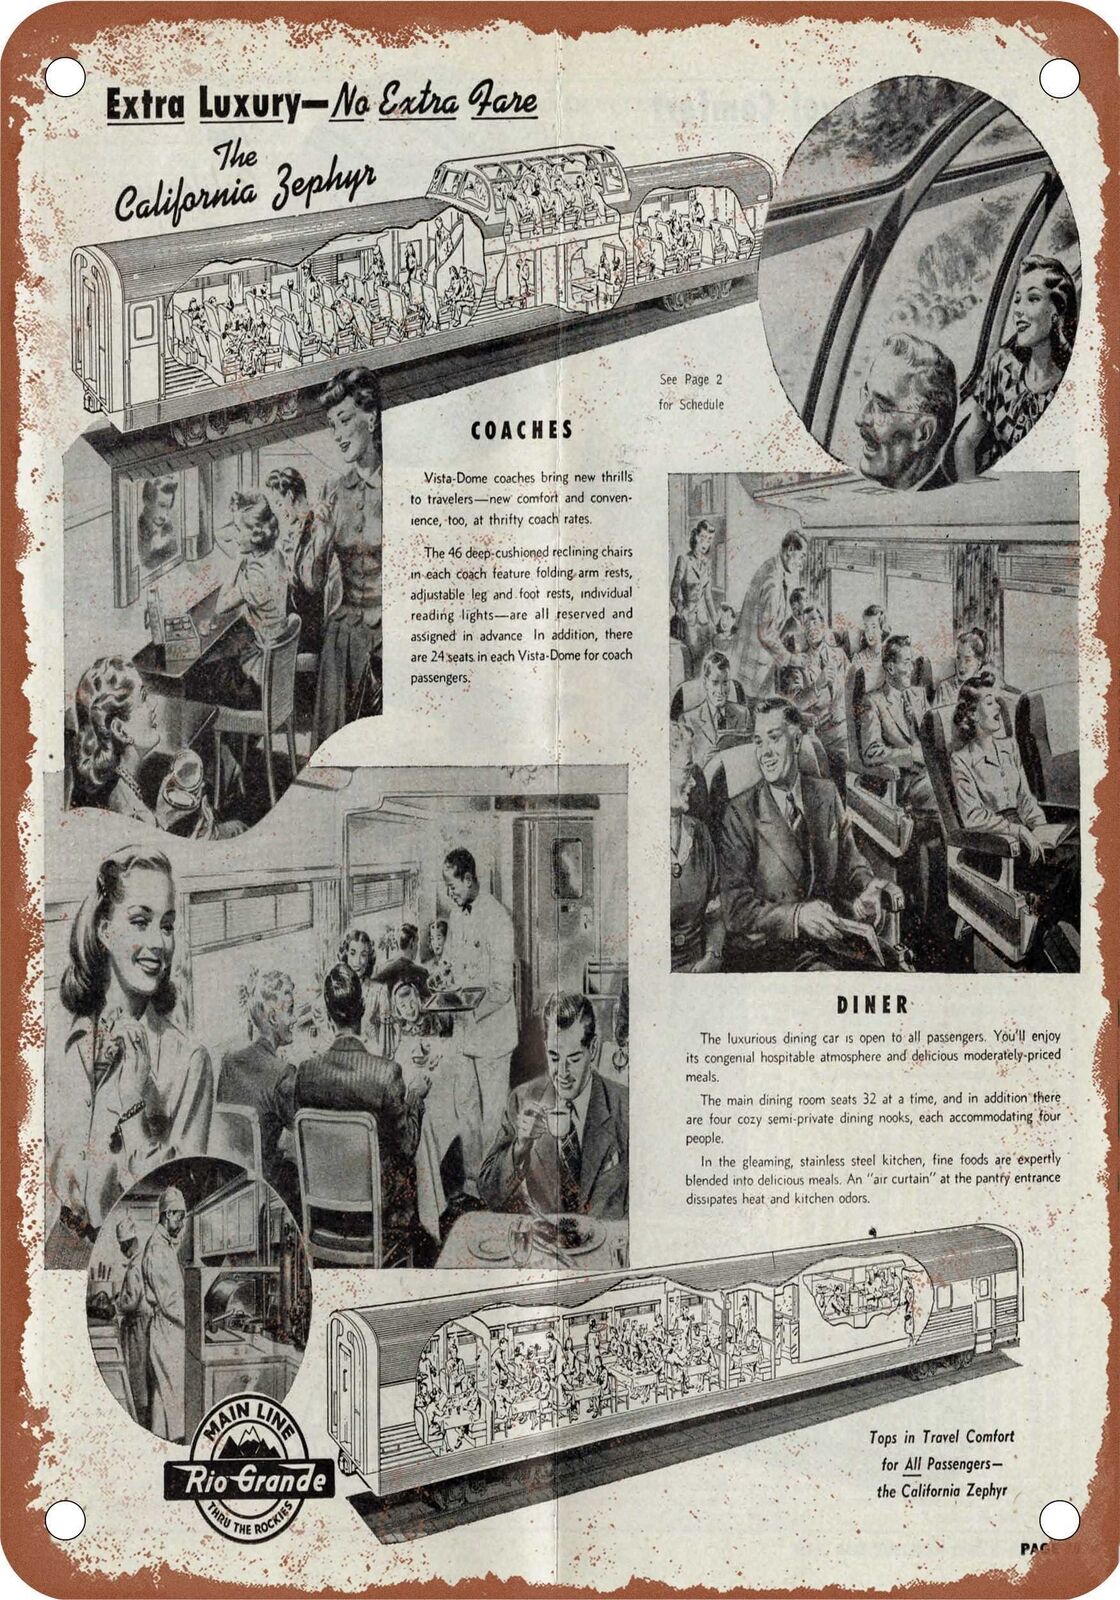 METAL SIGN - 1949 Rio Grande Coaches and Diner - Vintage Rusty Look